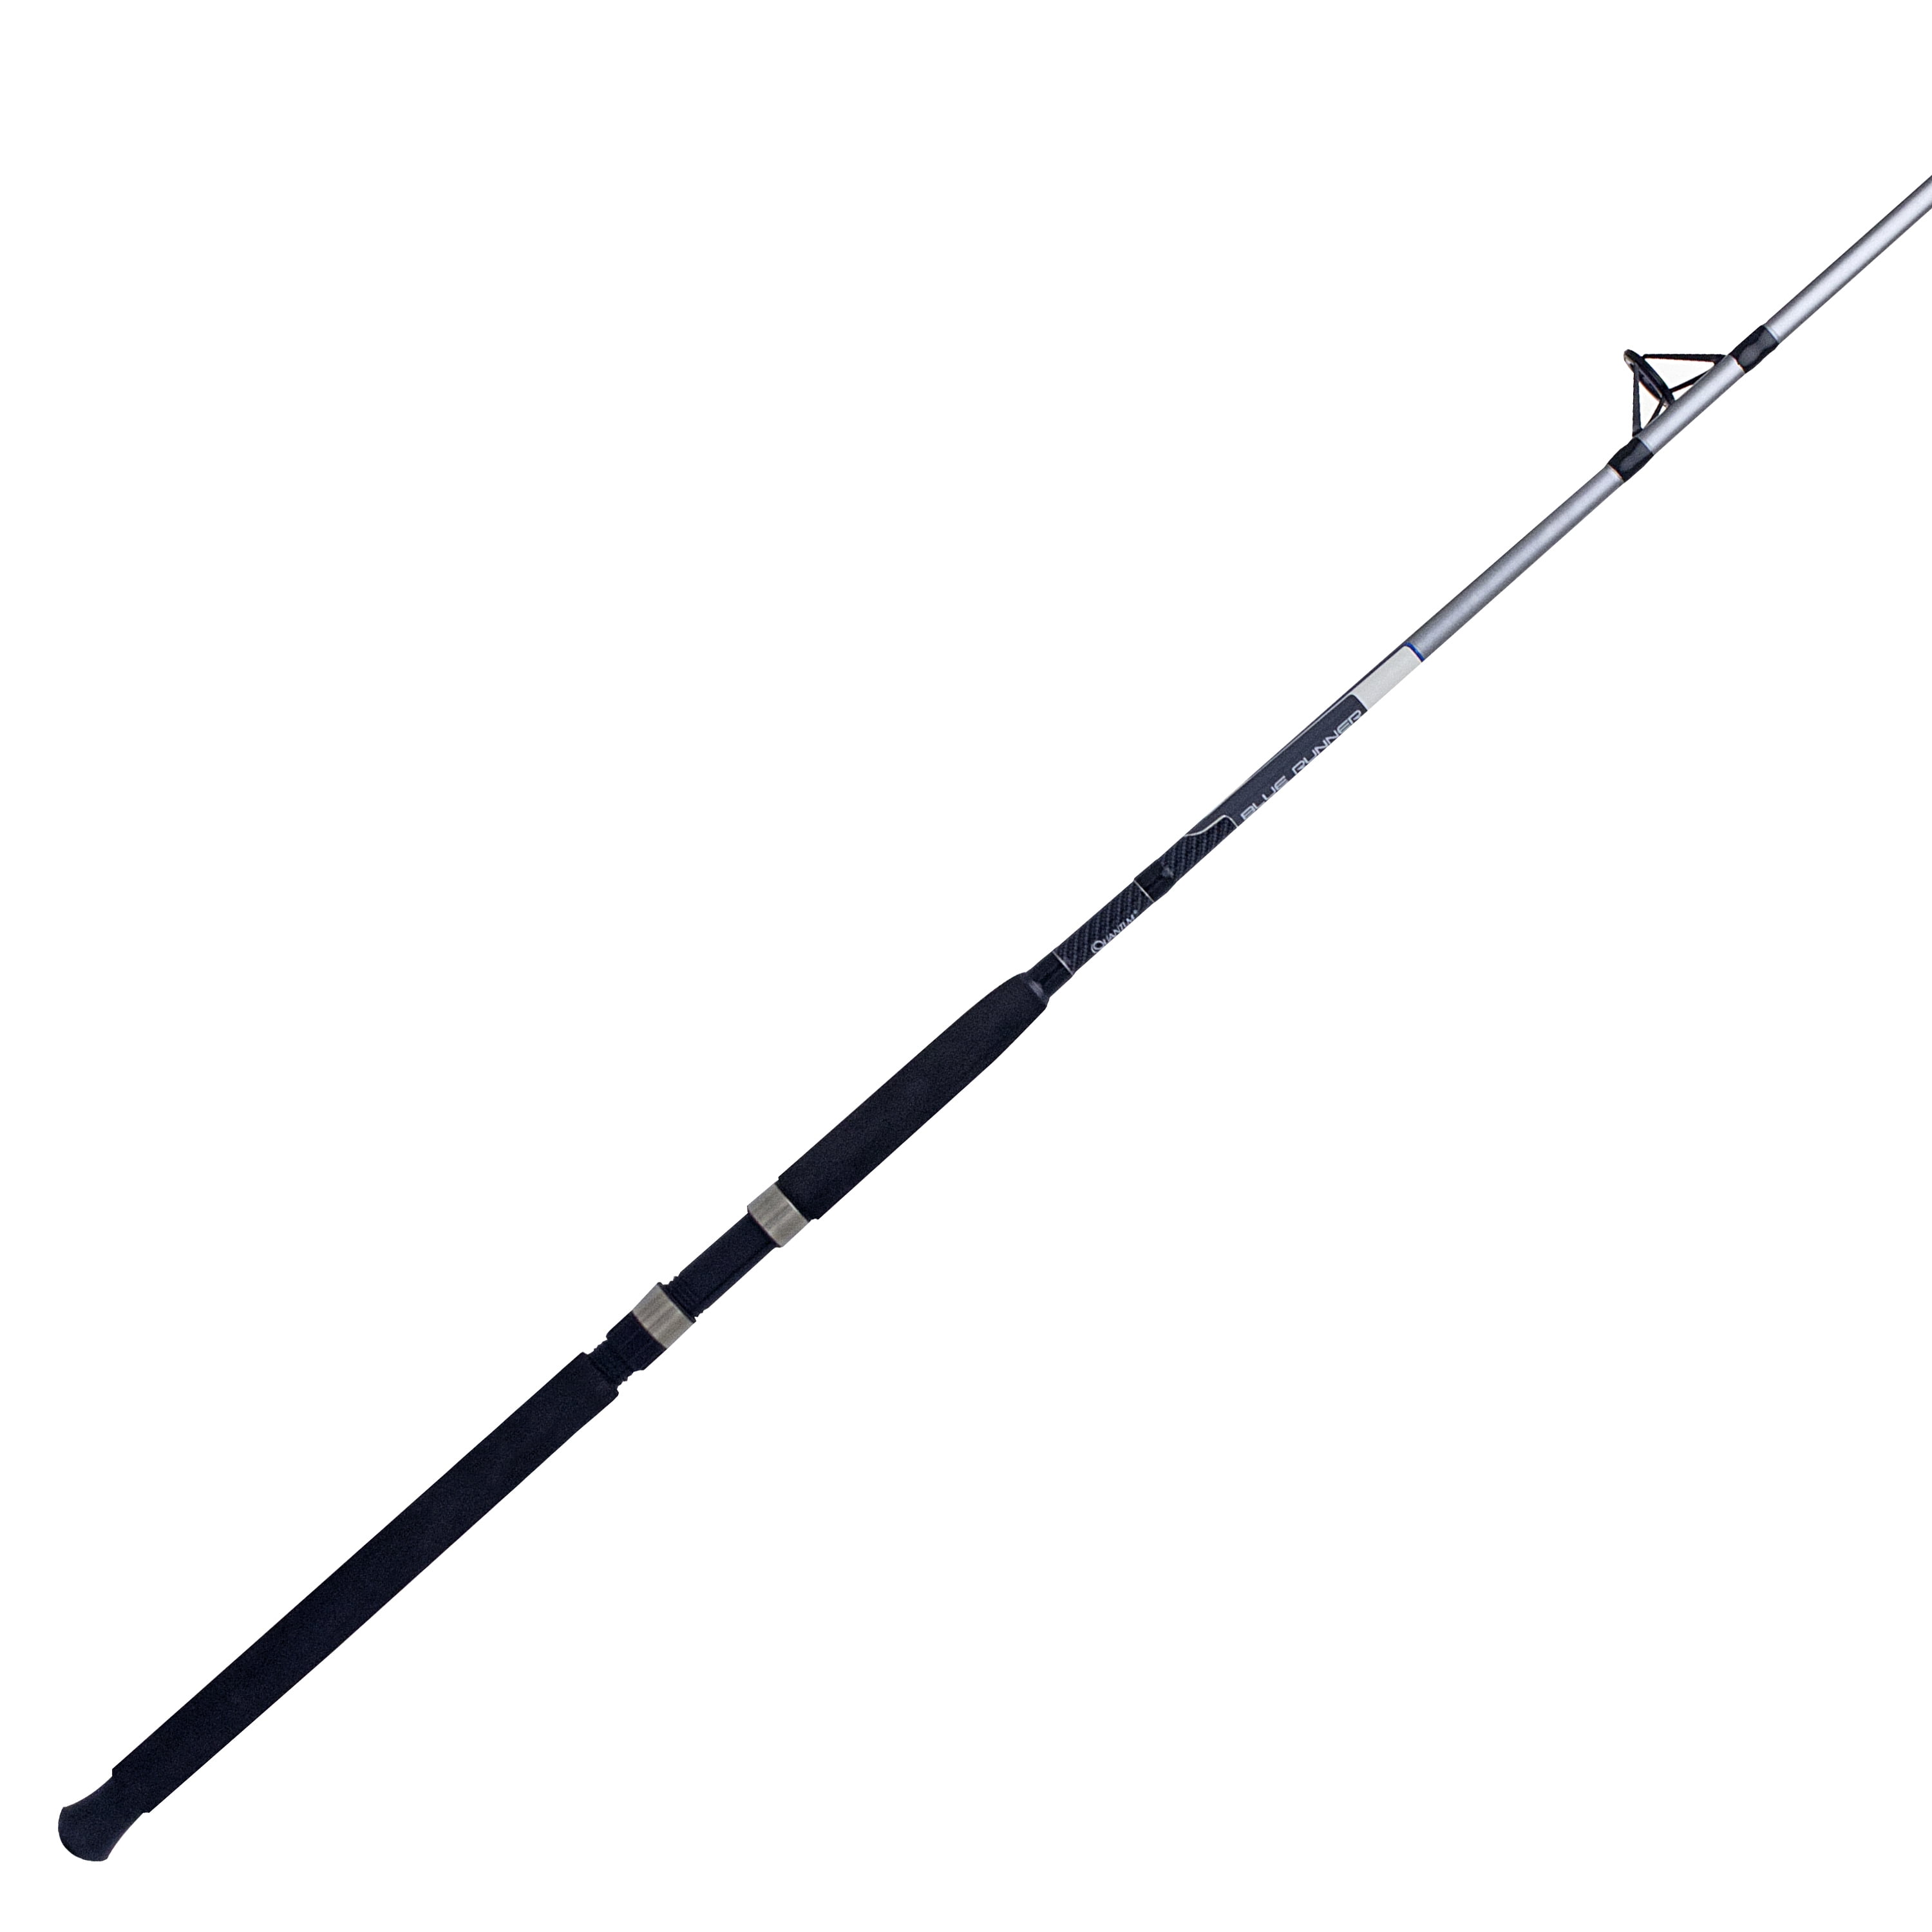 Ft fishing rod